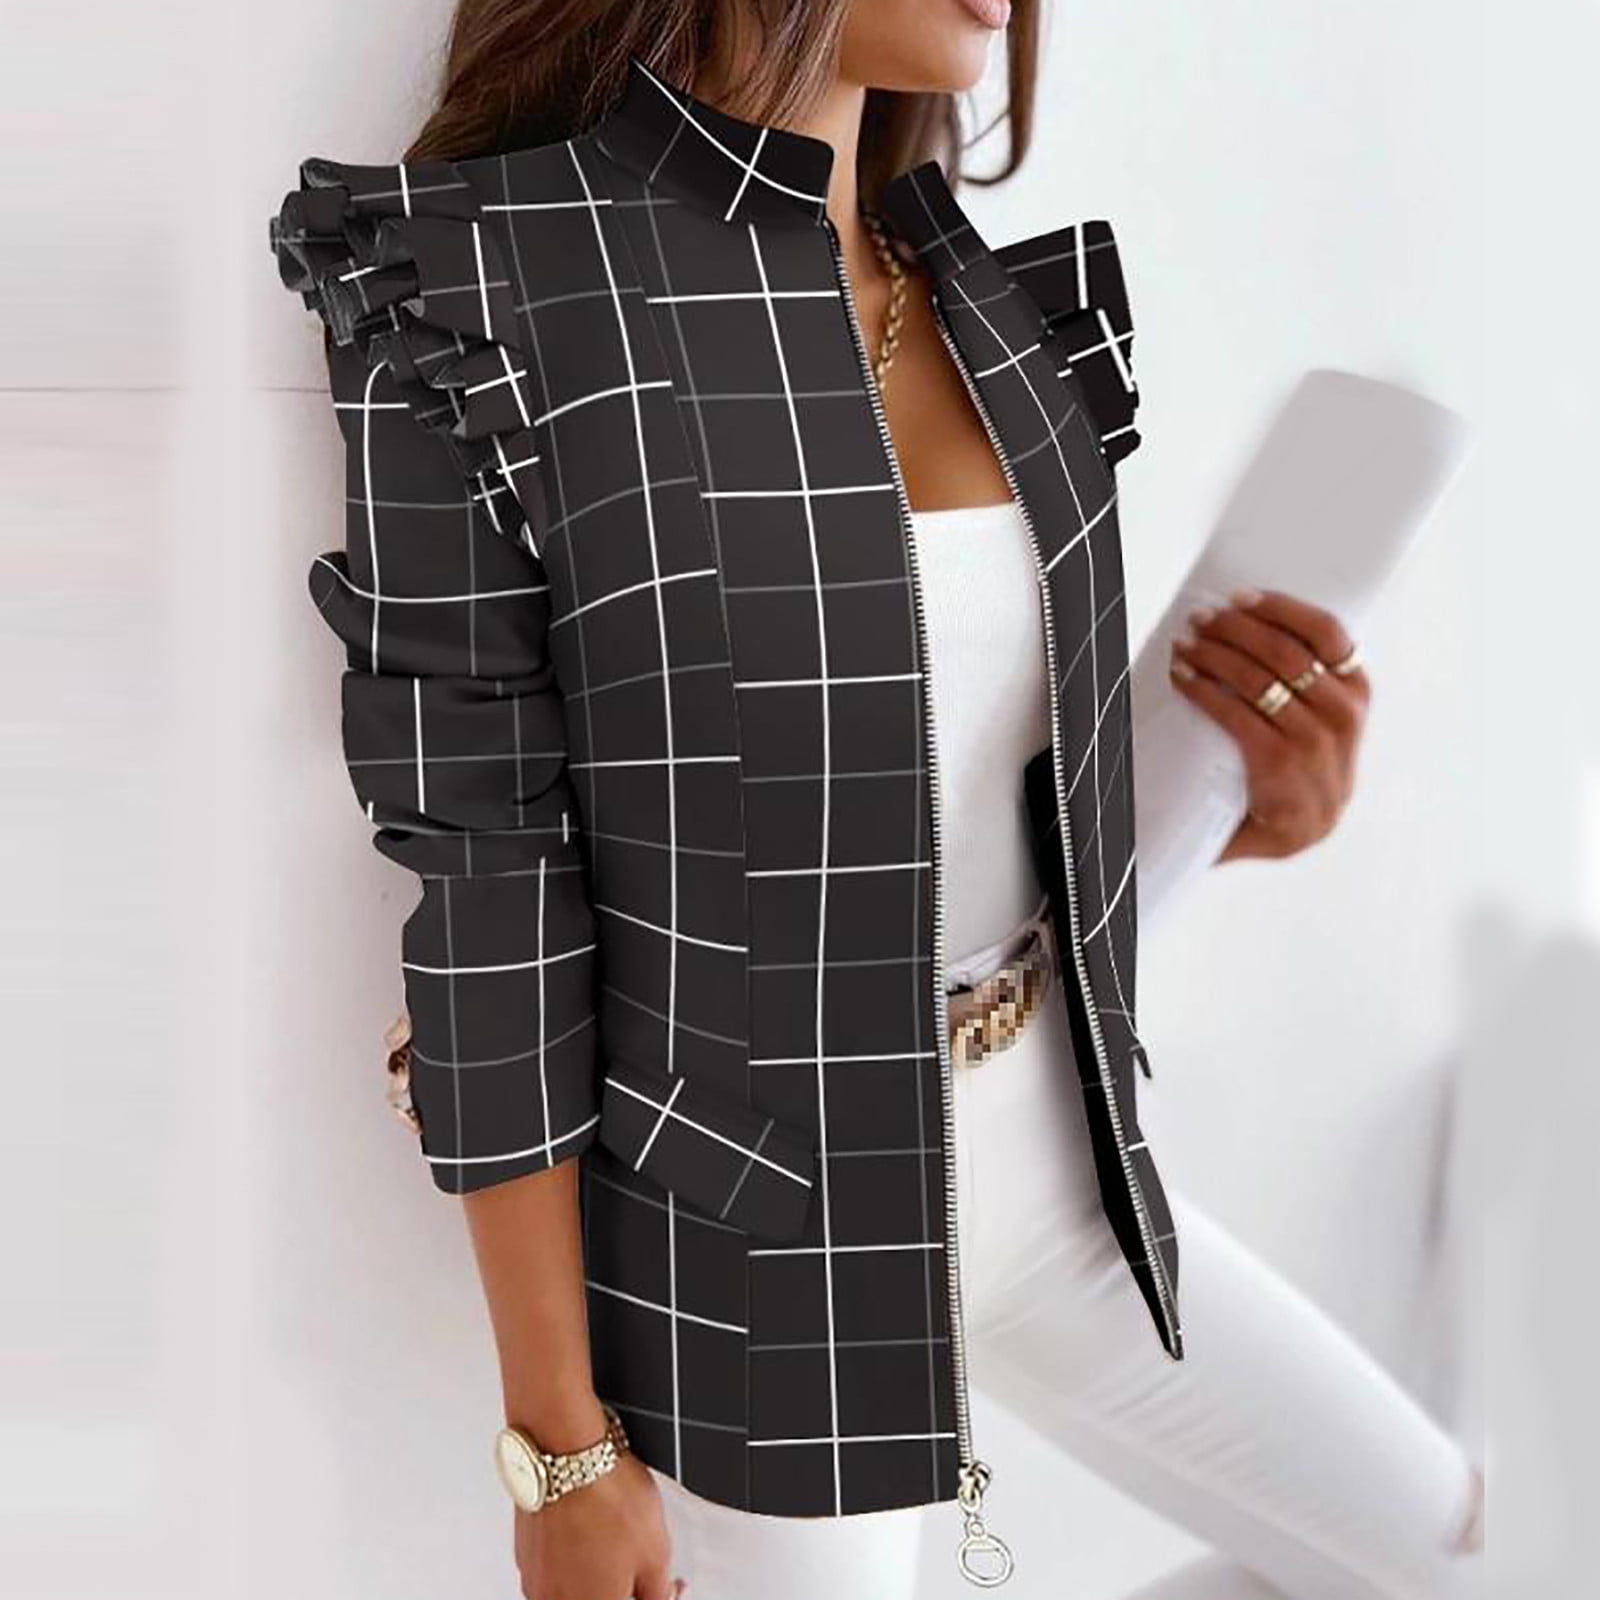 Meichang Women's Zip Up Blazer Ruffle Long Sleeve Coat Turtle Neck Outwear  Trendy Plaid Blazer Jacket Office Cover Up 